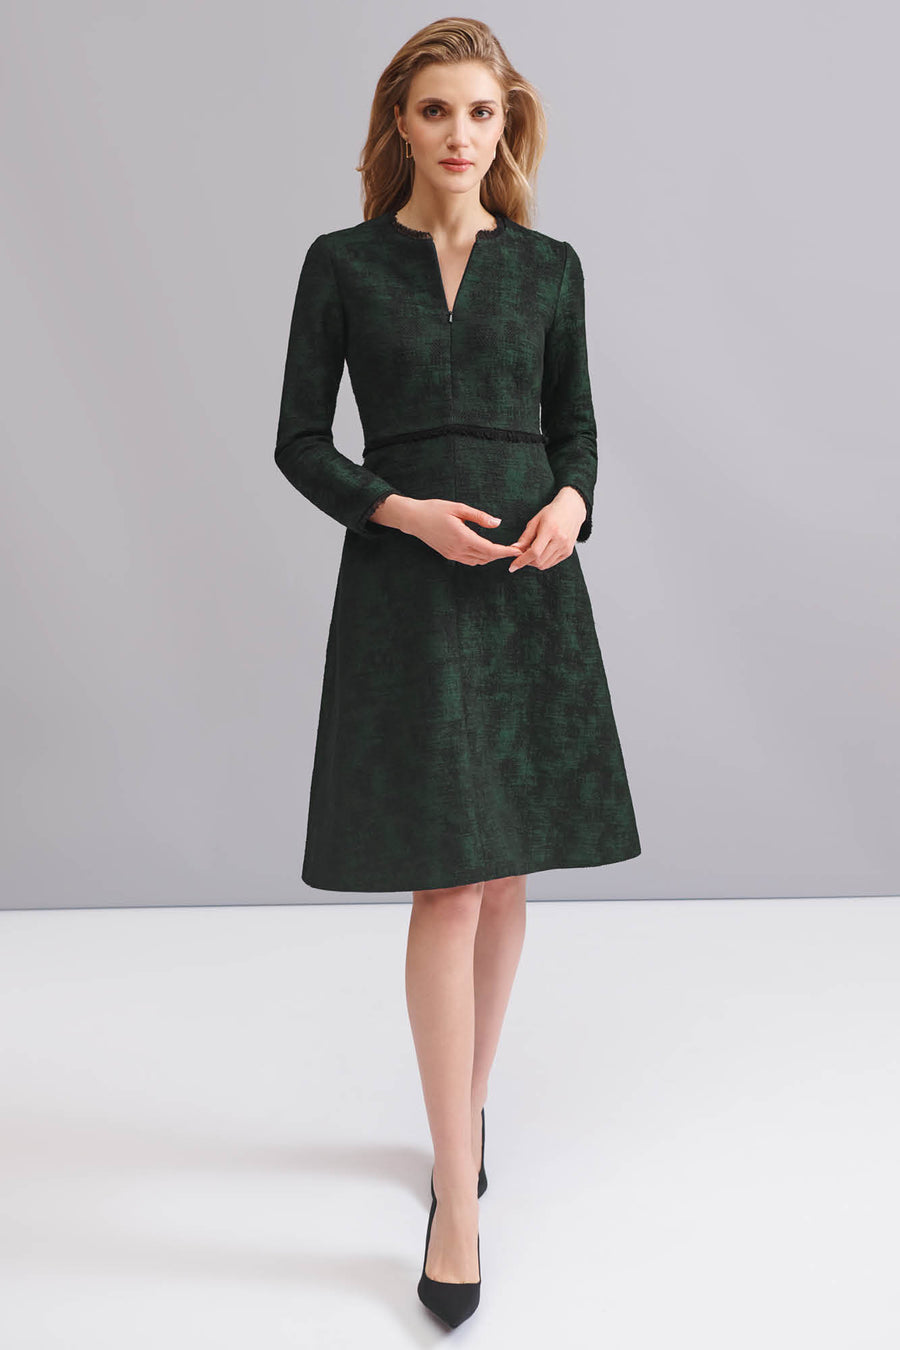 Bloomsbury Green Jacquard Dress